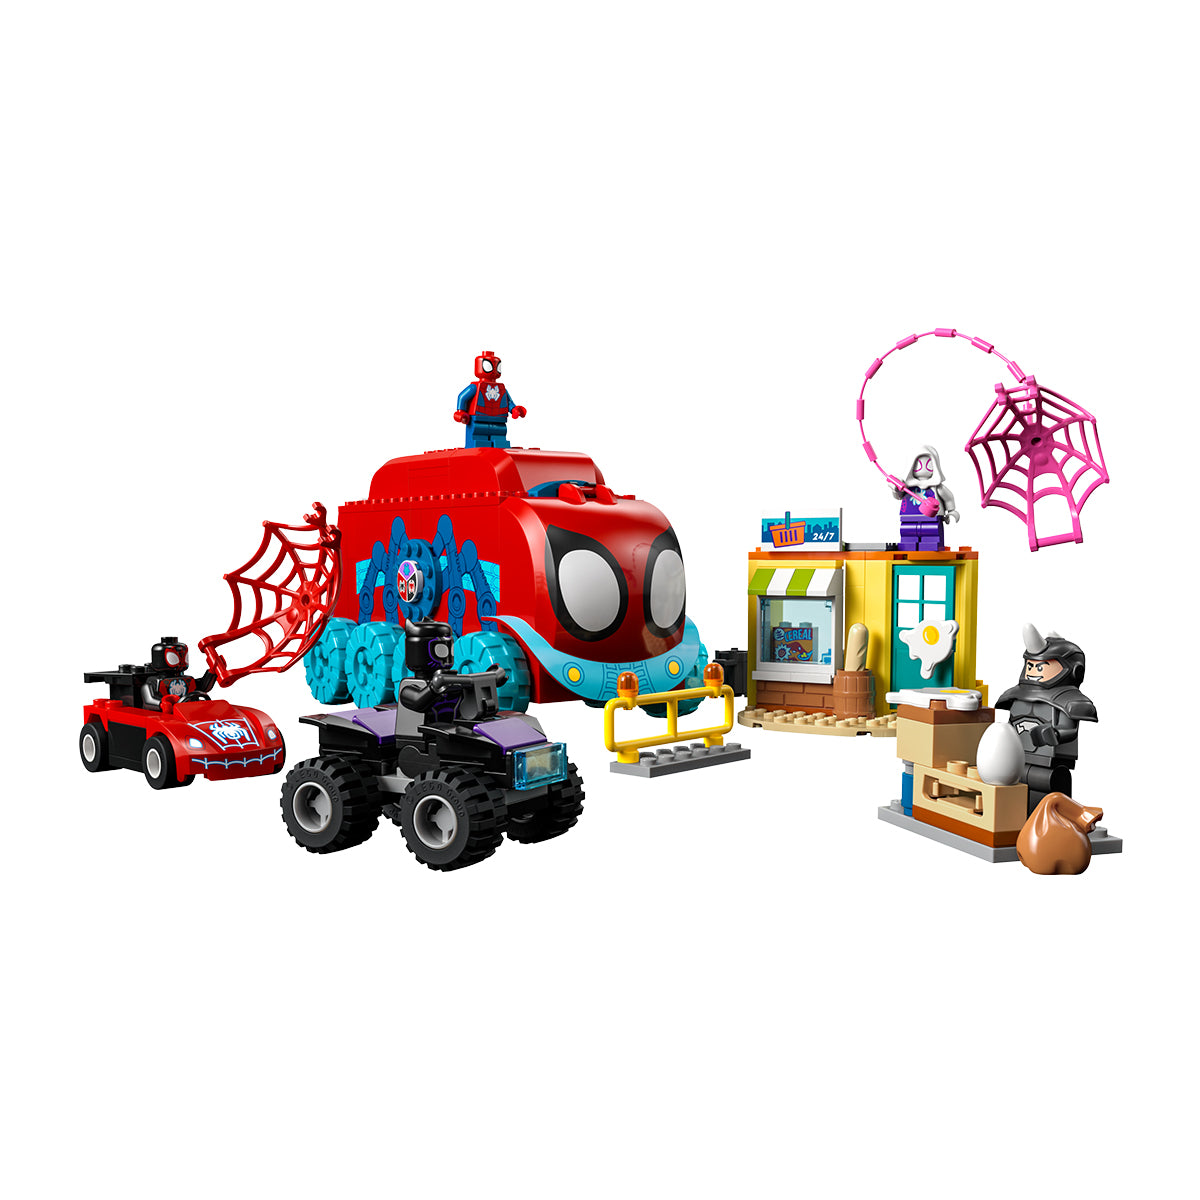 LEGO Marvel - Team Spidey's Mobile Headquarters 10791